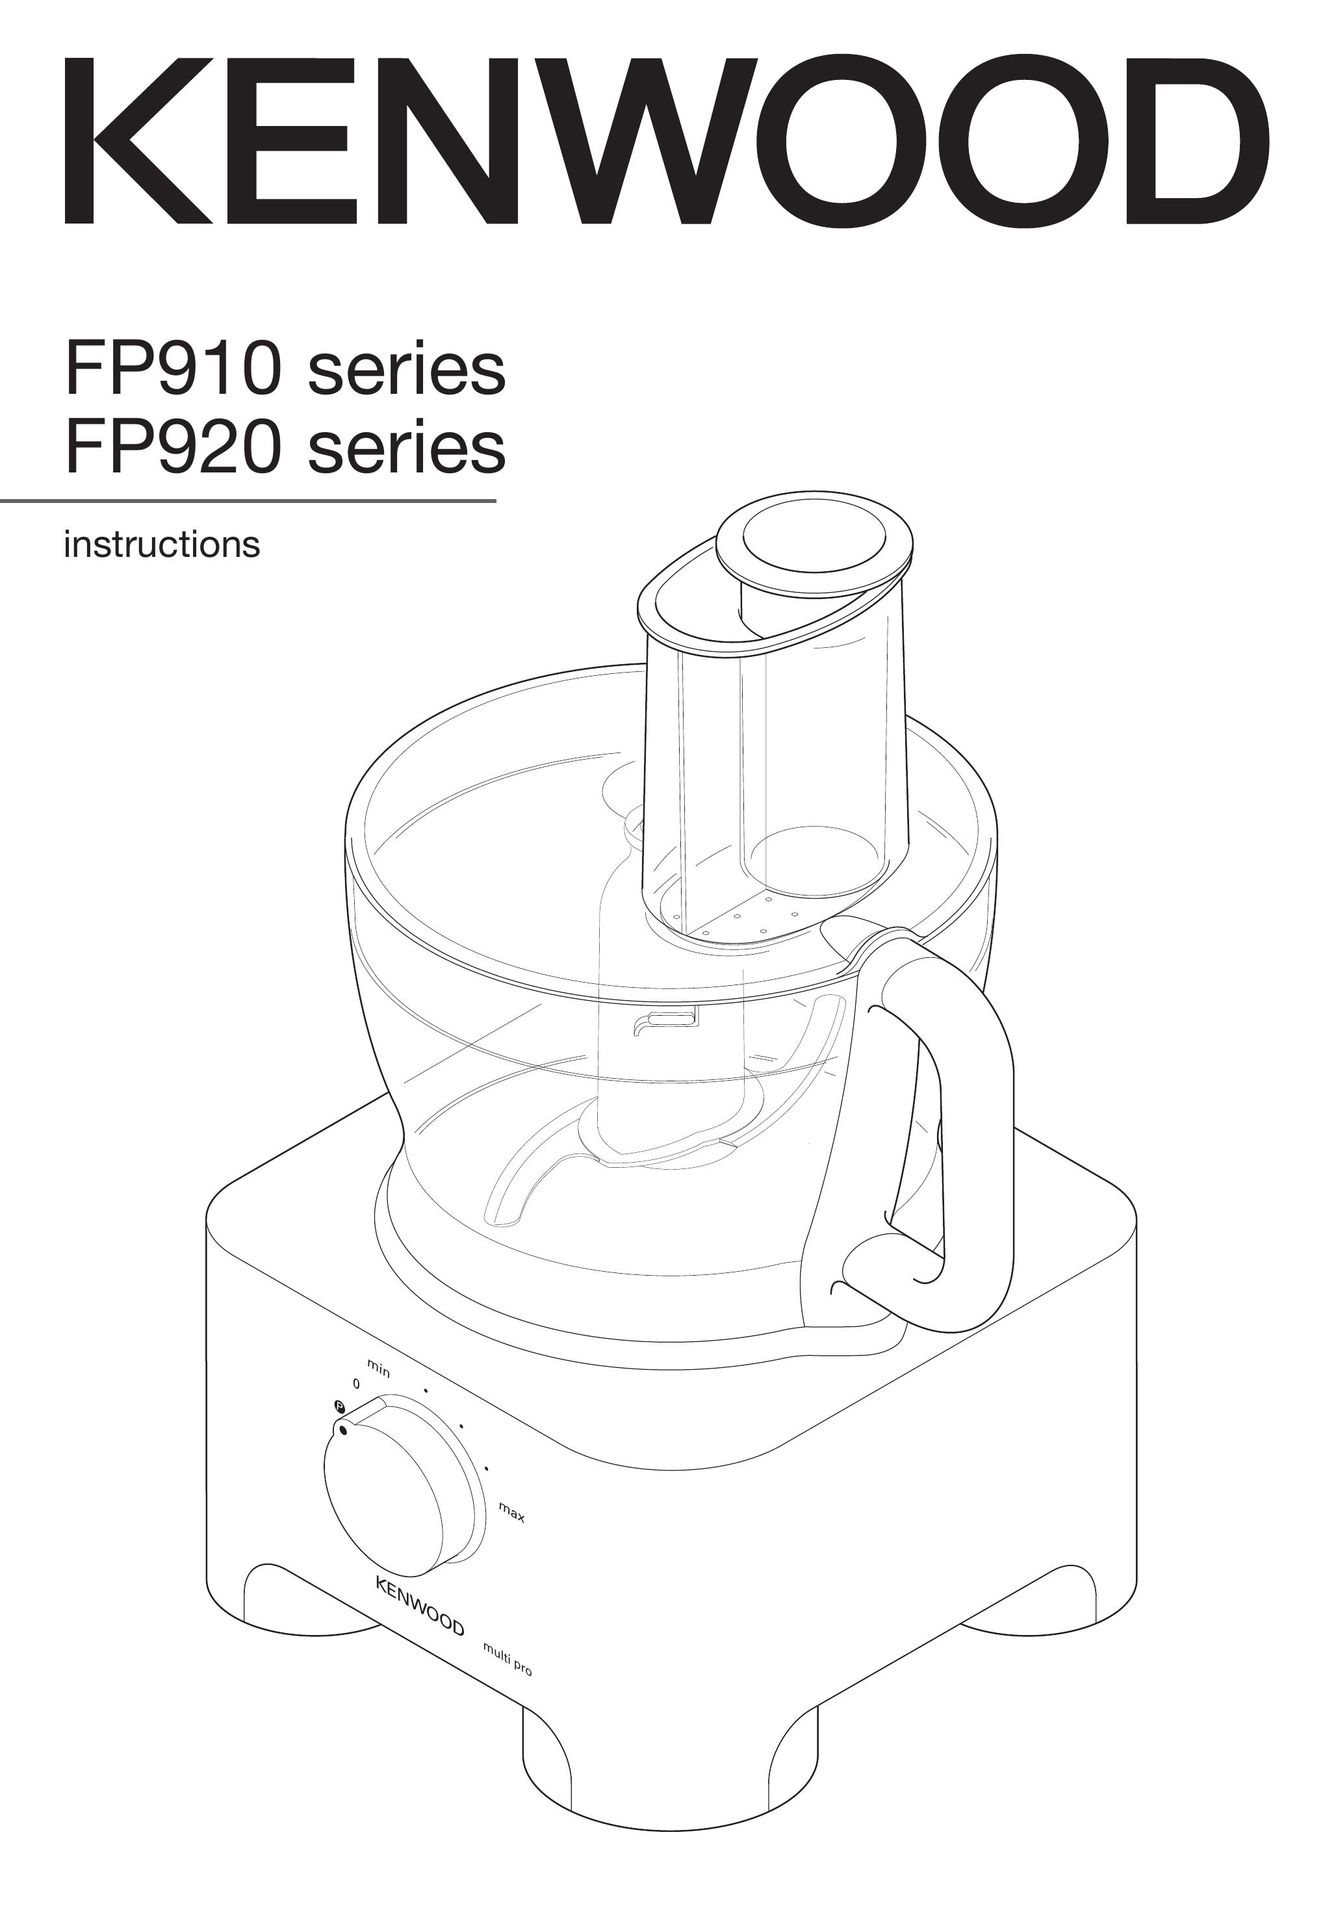 Kenwood FP920 series Food Processor User Manual